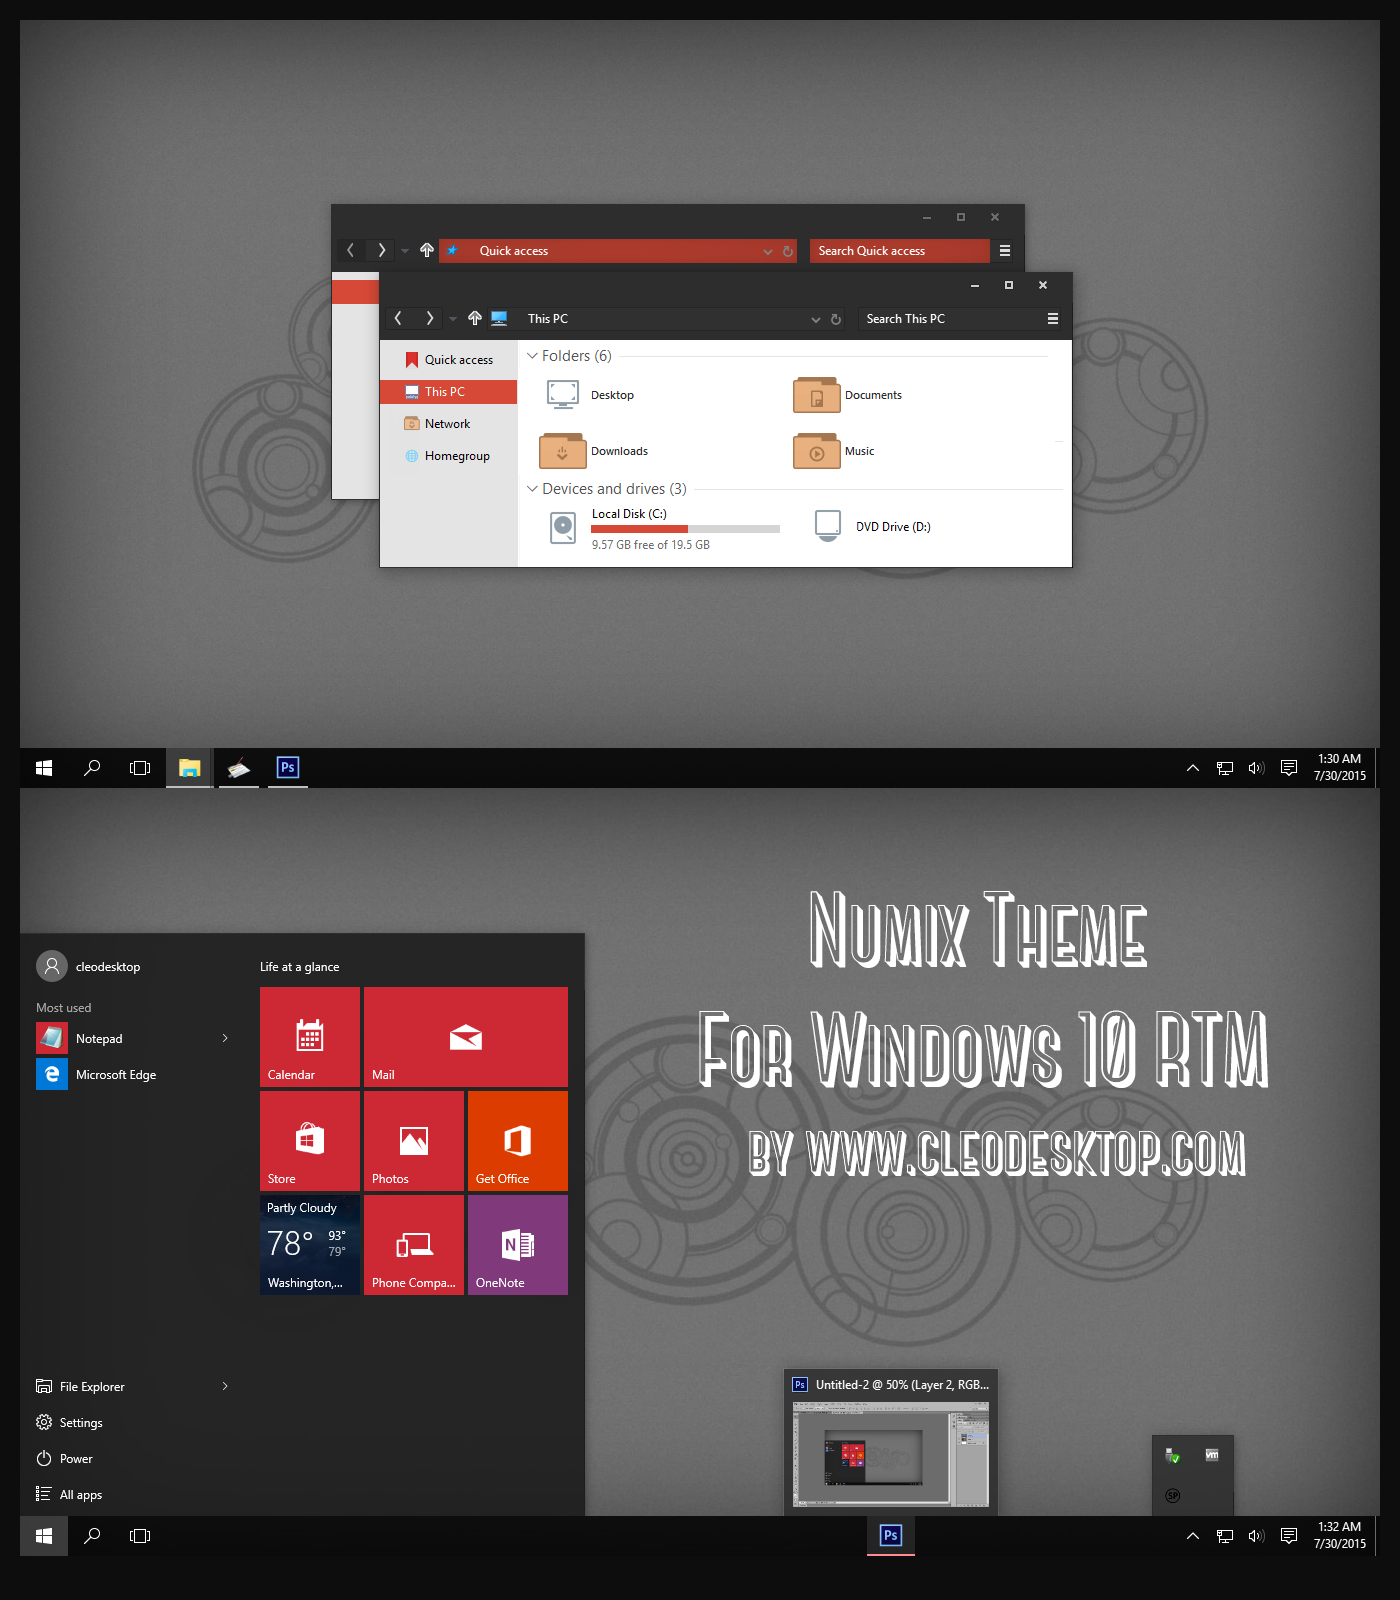 Numix Theme For Windows 10 RTM